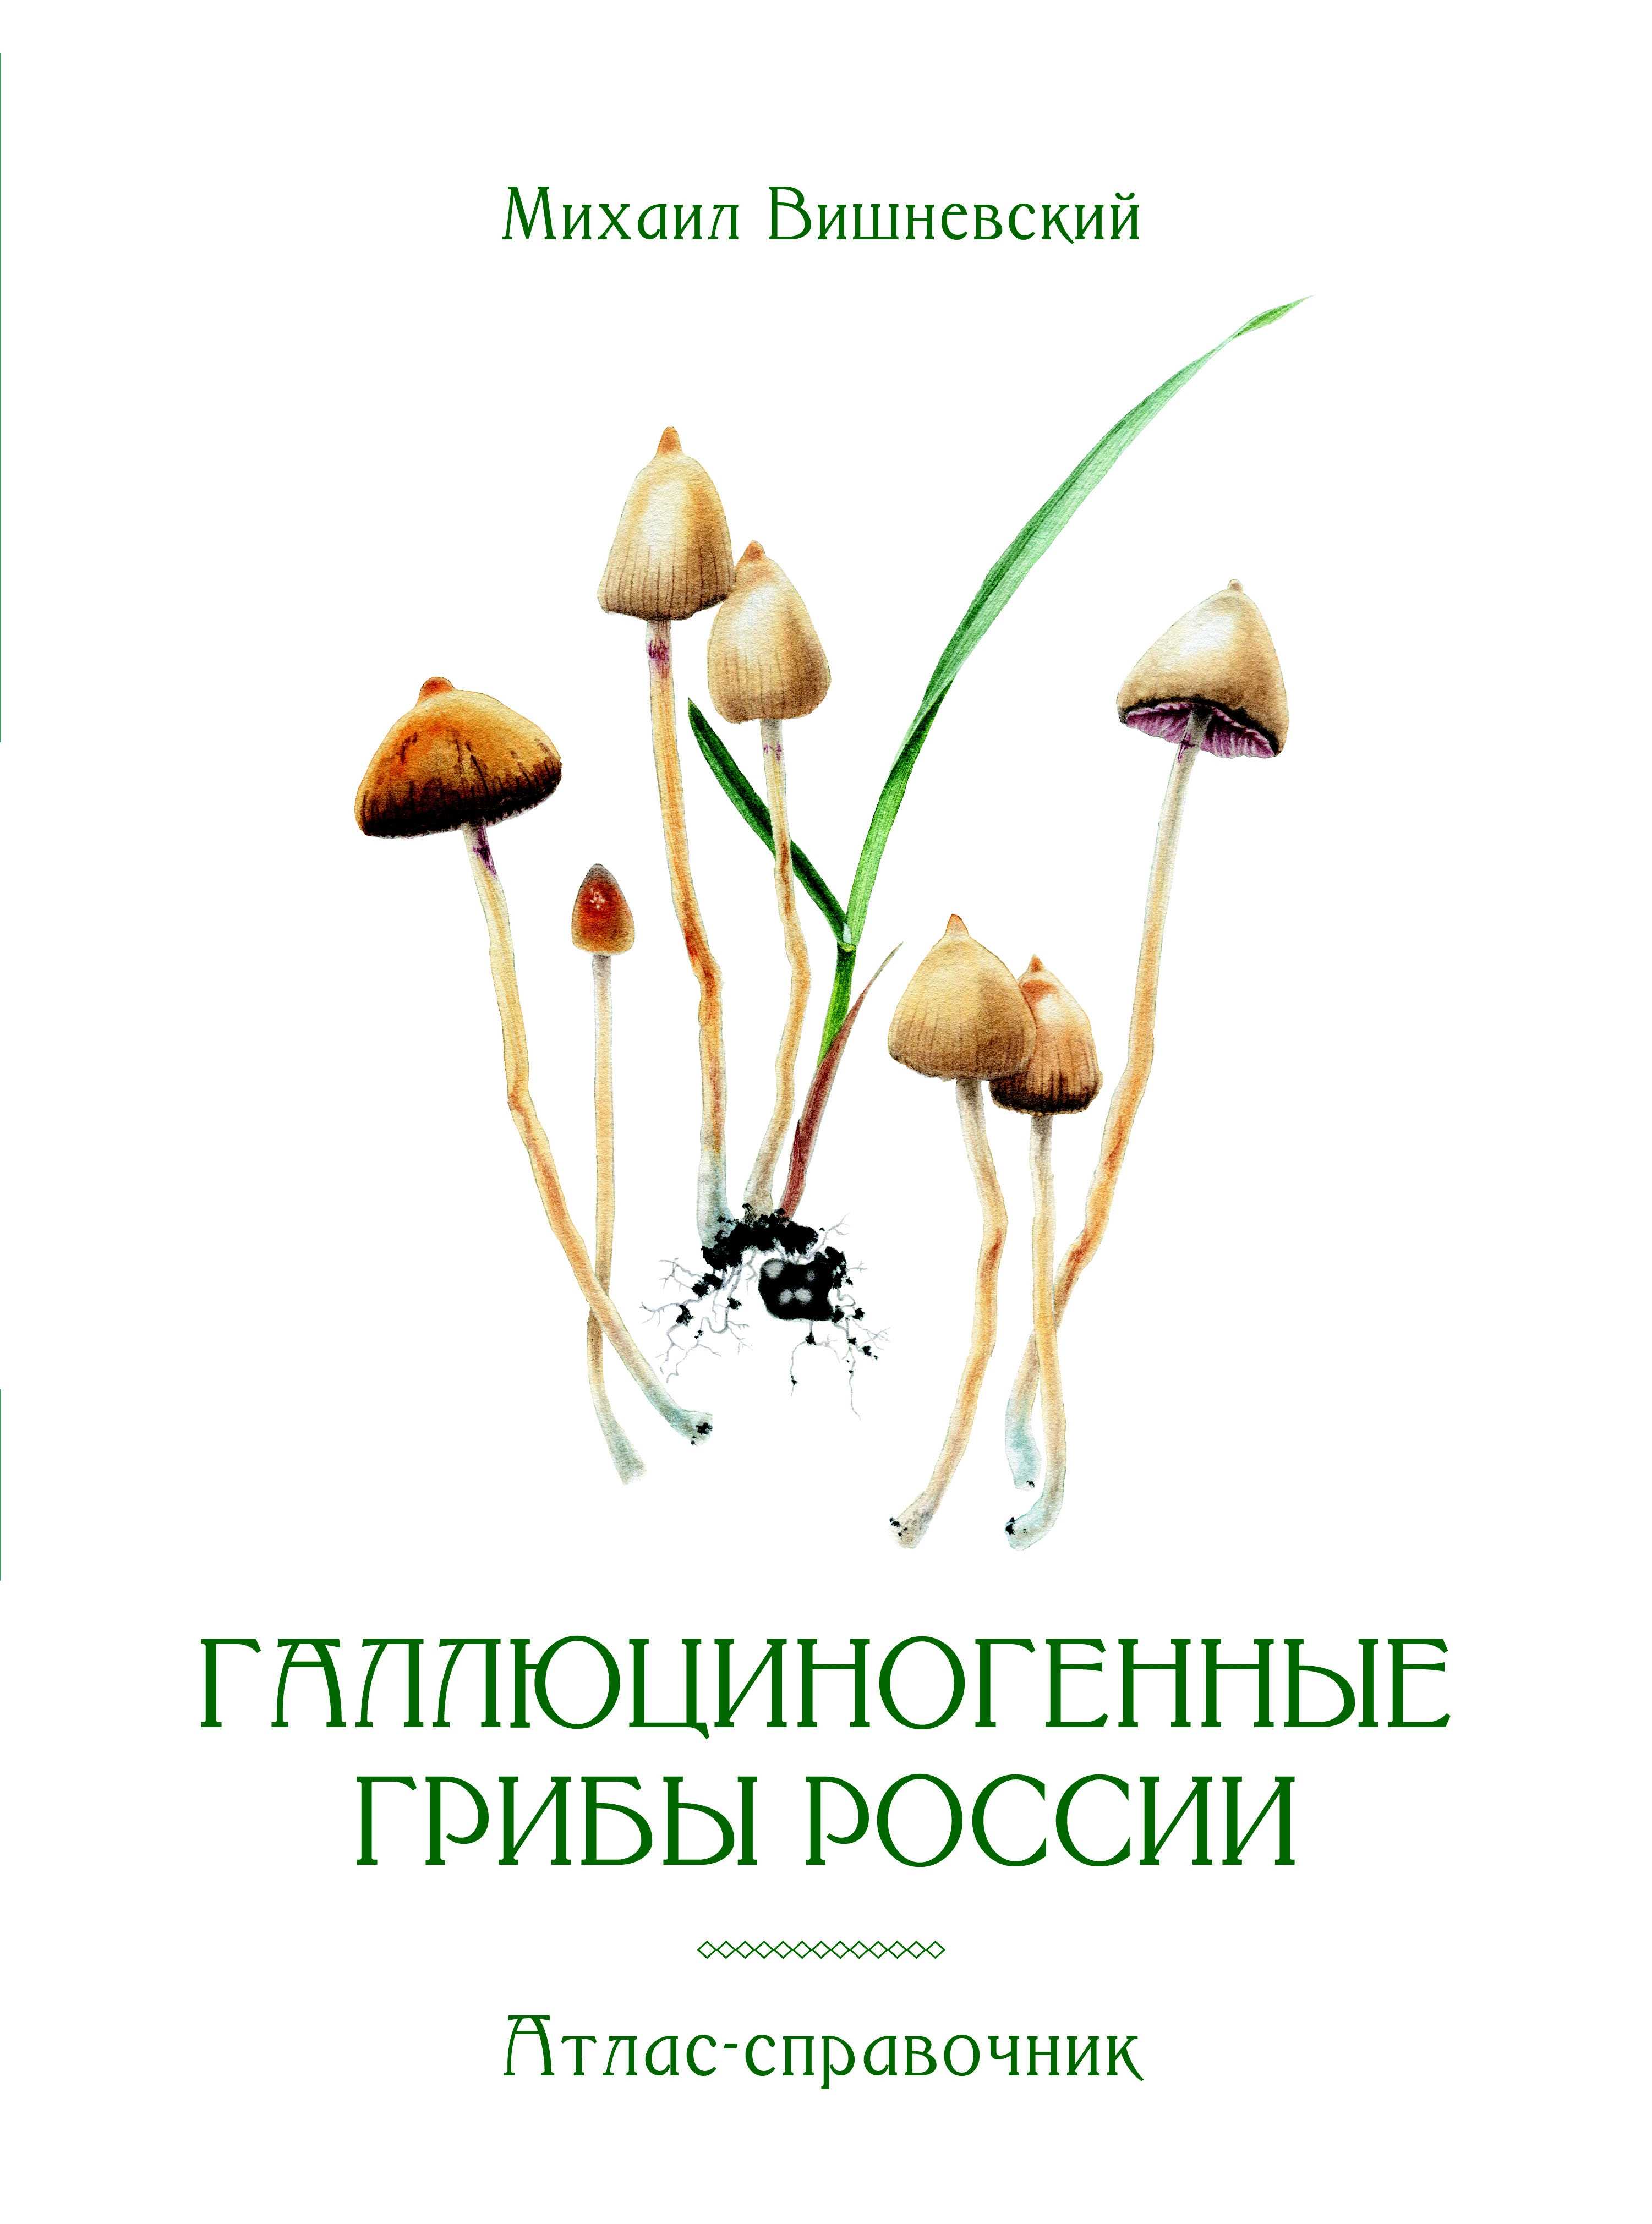 Псилоцибе чешская (Psilocybe bohemica): места произрастания, съедобность, негативное влияние на организм. Описание внешнего вида с фото.